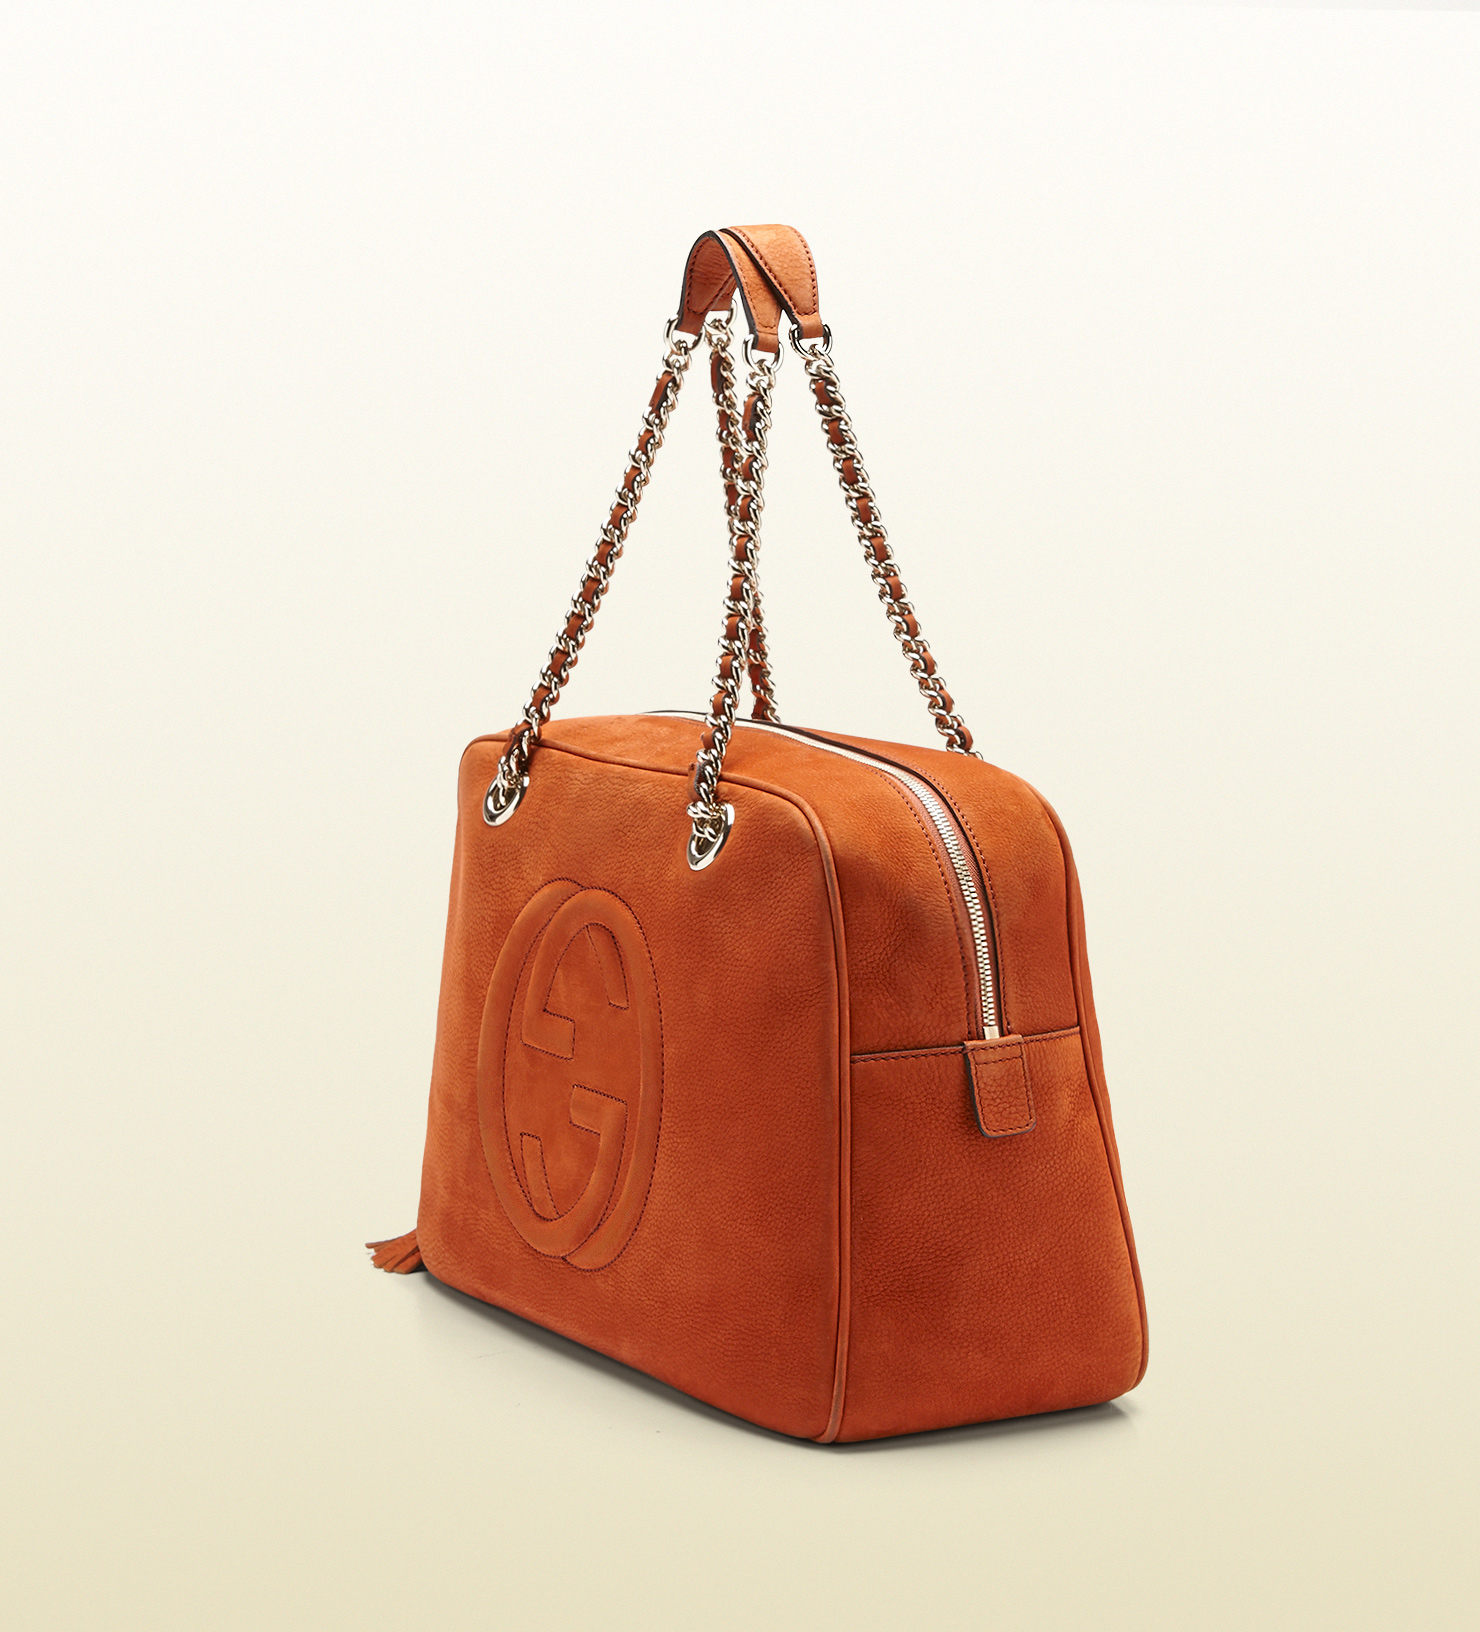 Lyst - Gucci Soho Nubuck Leather Chain Shoulder Bag in Orange